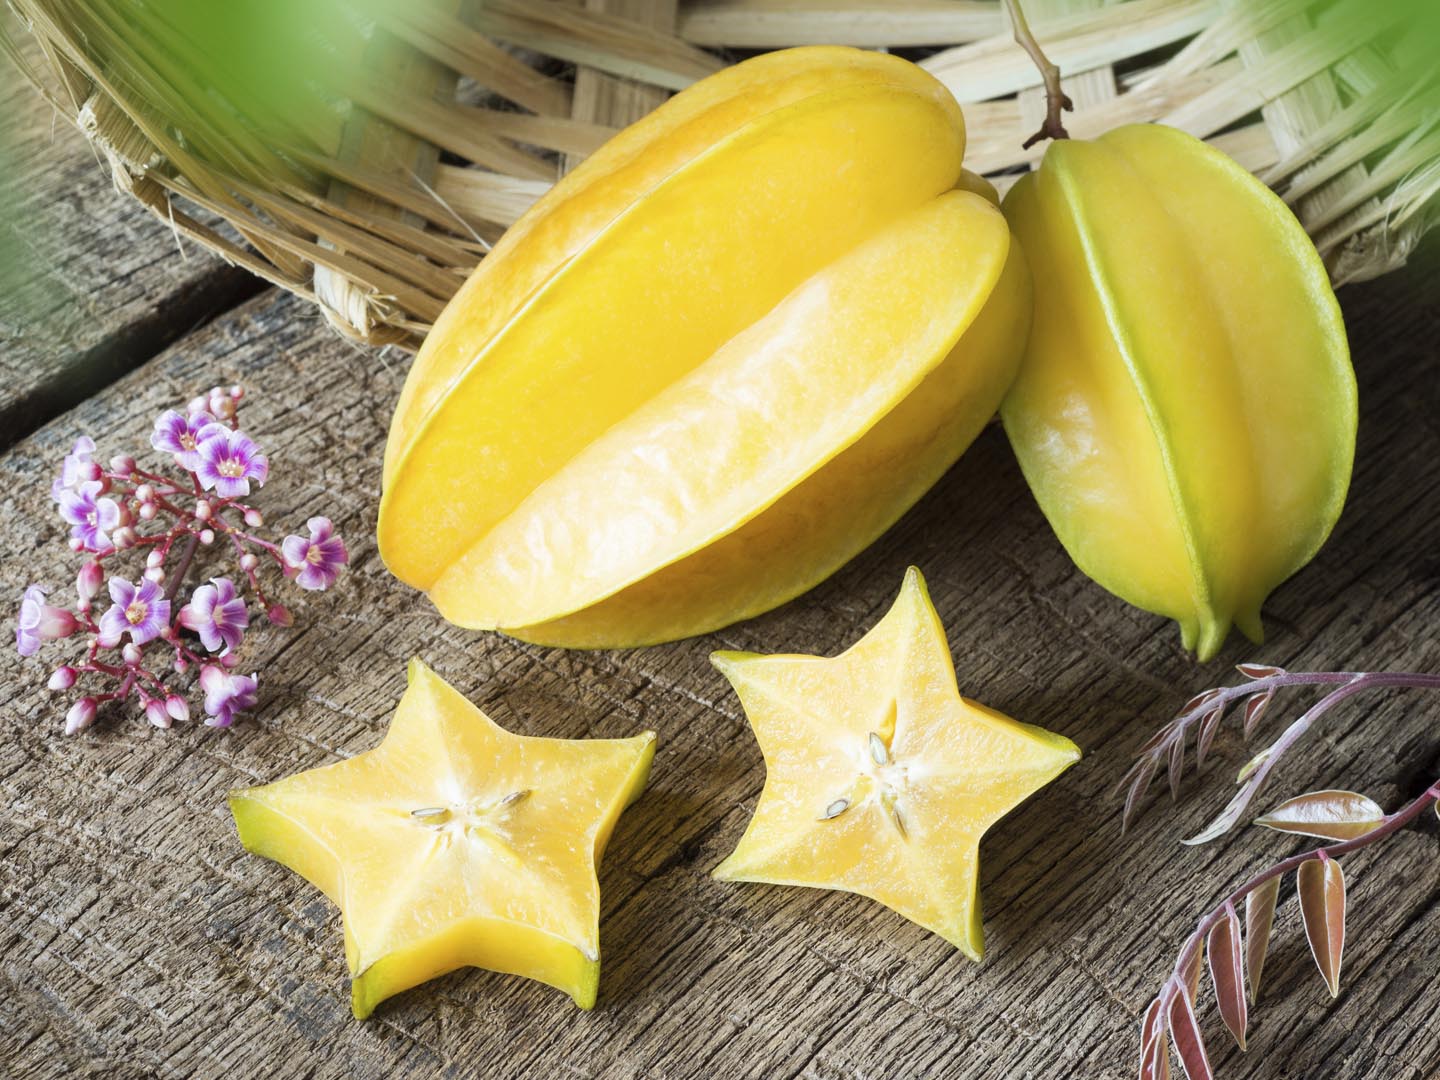 Star Fruit Taste - How to Eat Star Fruit | Dr. Weil